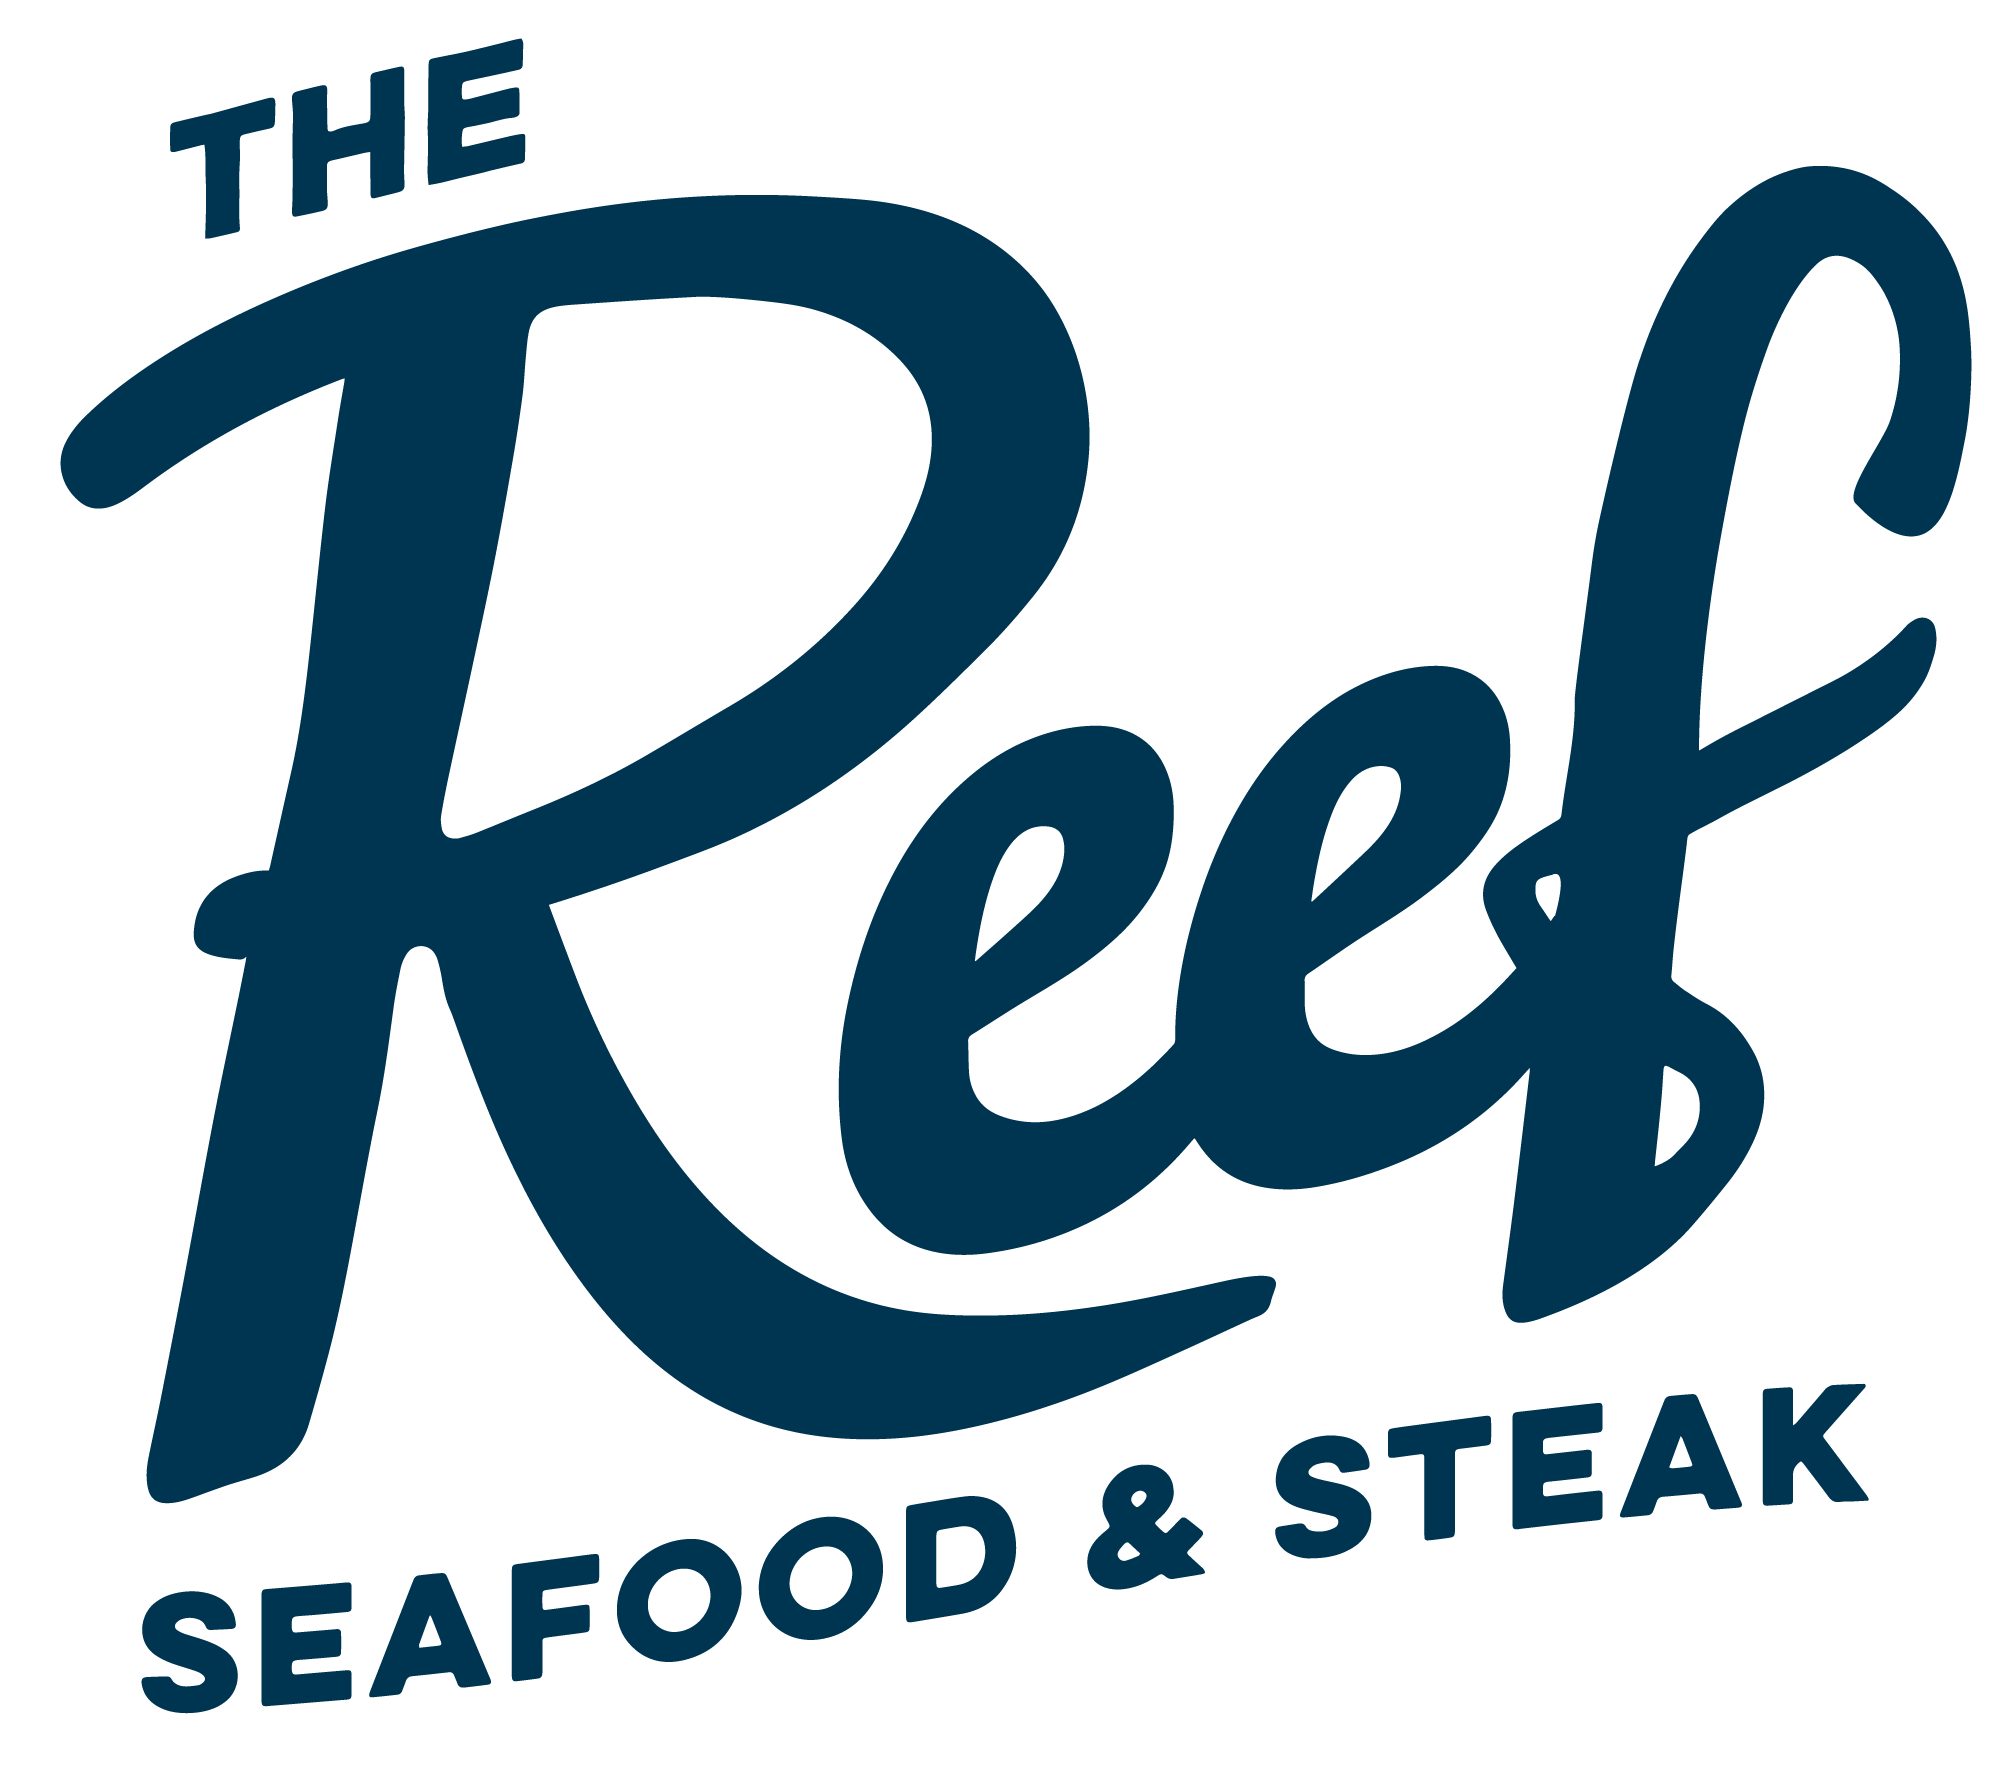 The Reef Seafood & Steak